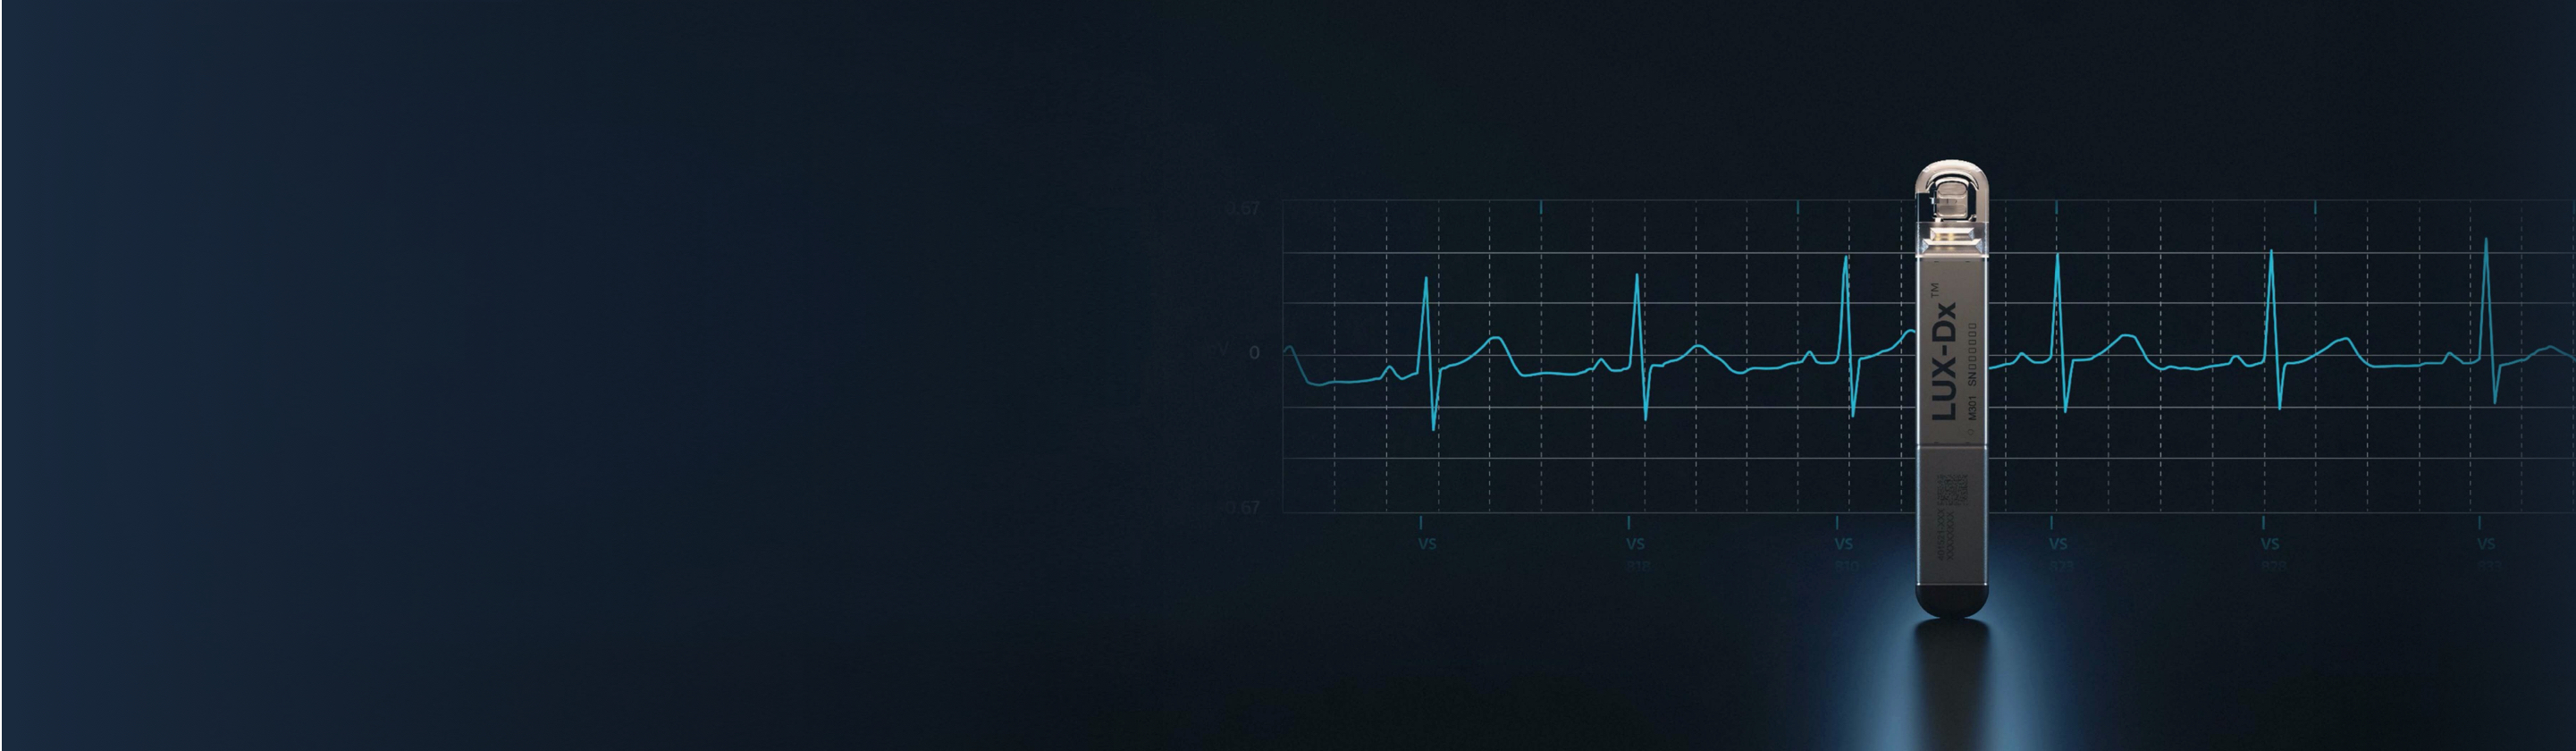 Boston Scientific LUX-Dx Insertable Cardiac Monitor against dark blue background with S-ECG signal.